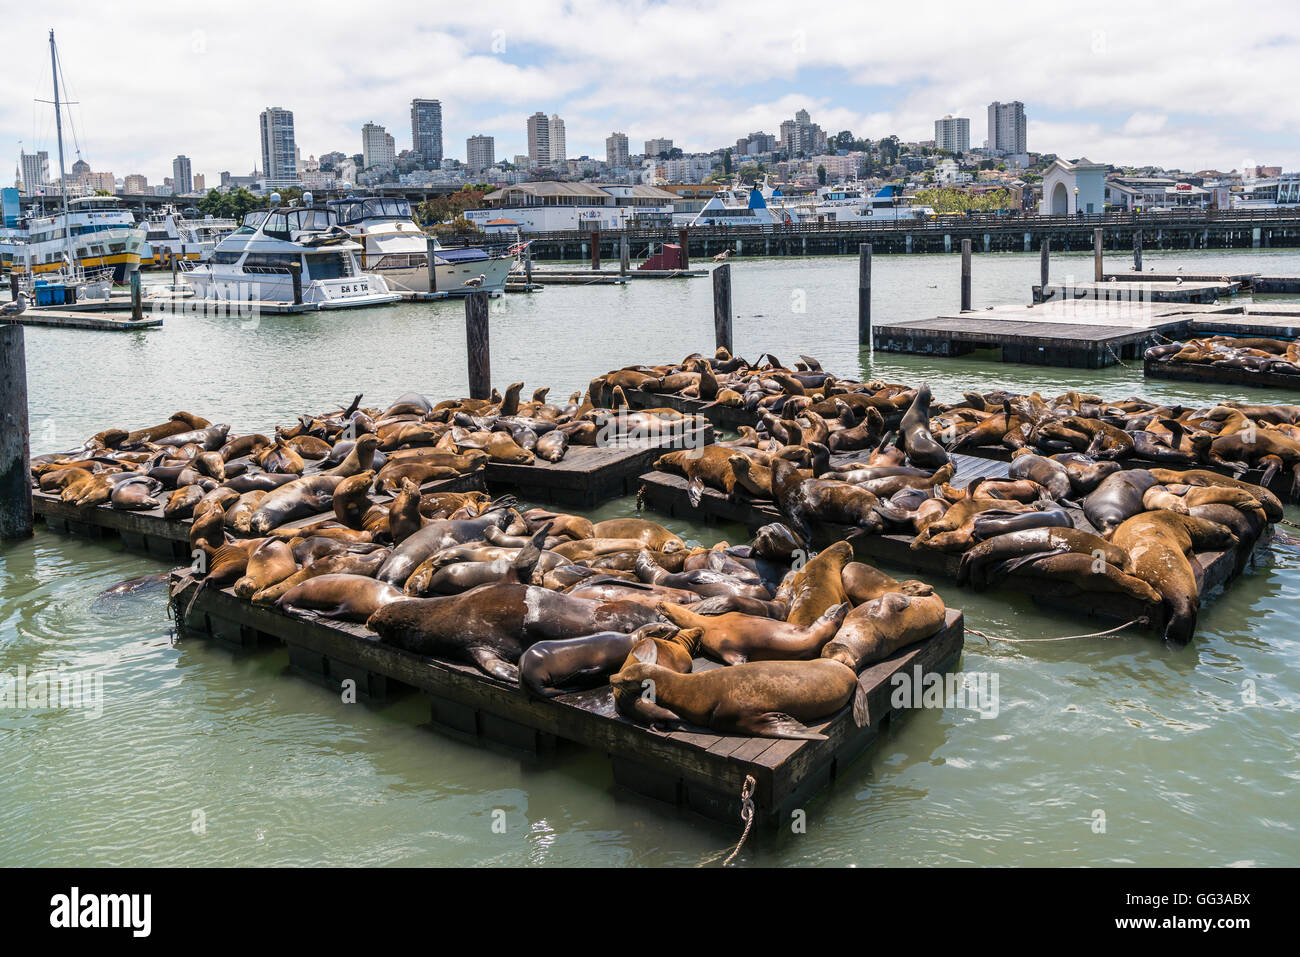 Pier 39, port, San Francisco, USA Stock Photo